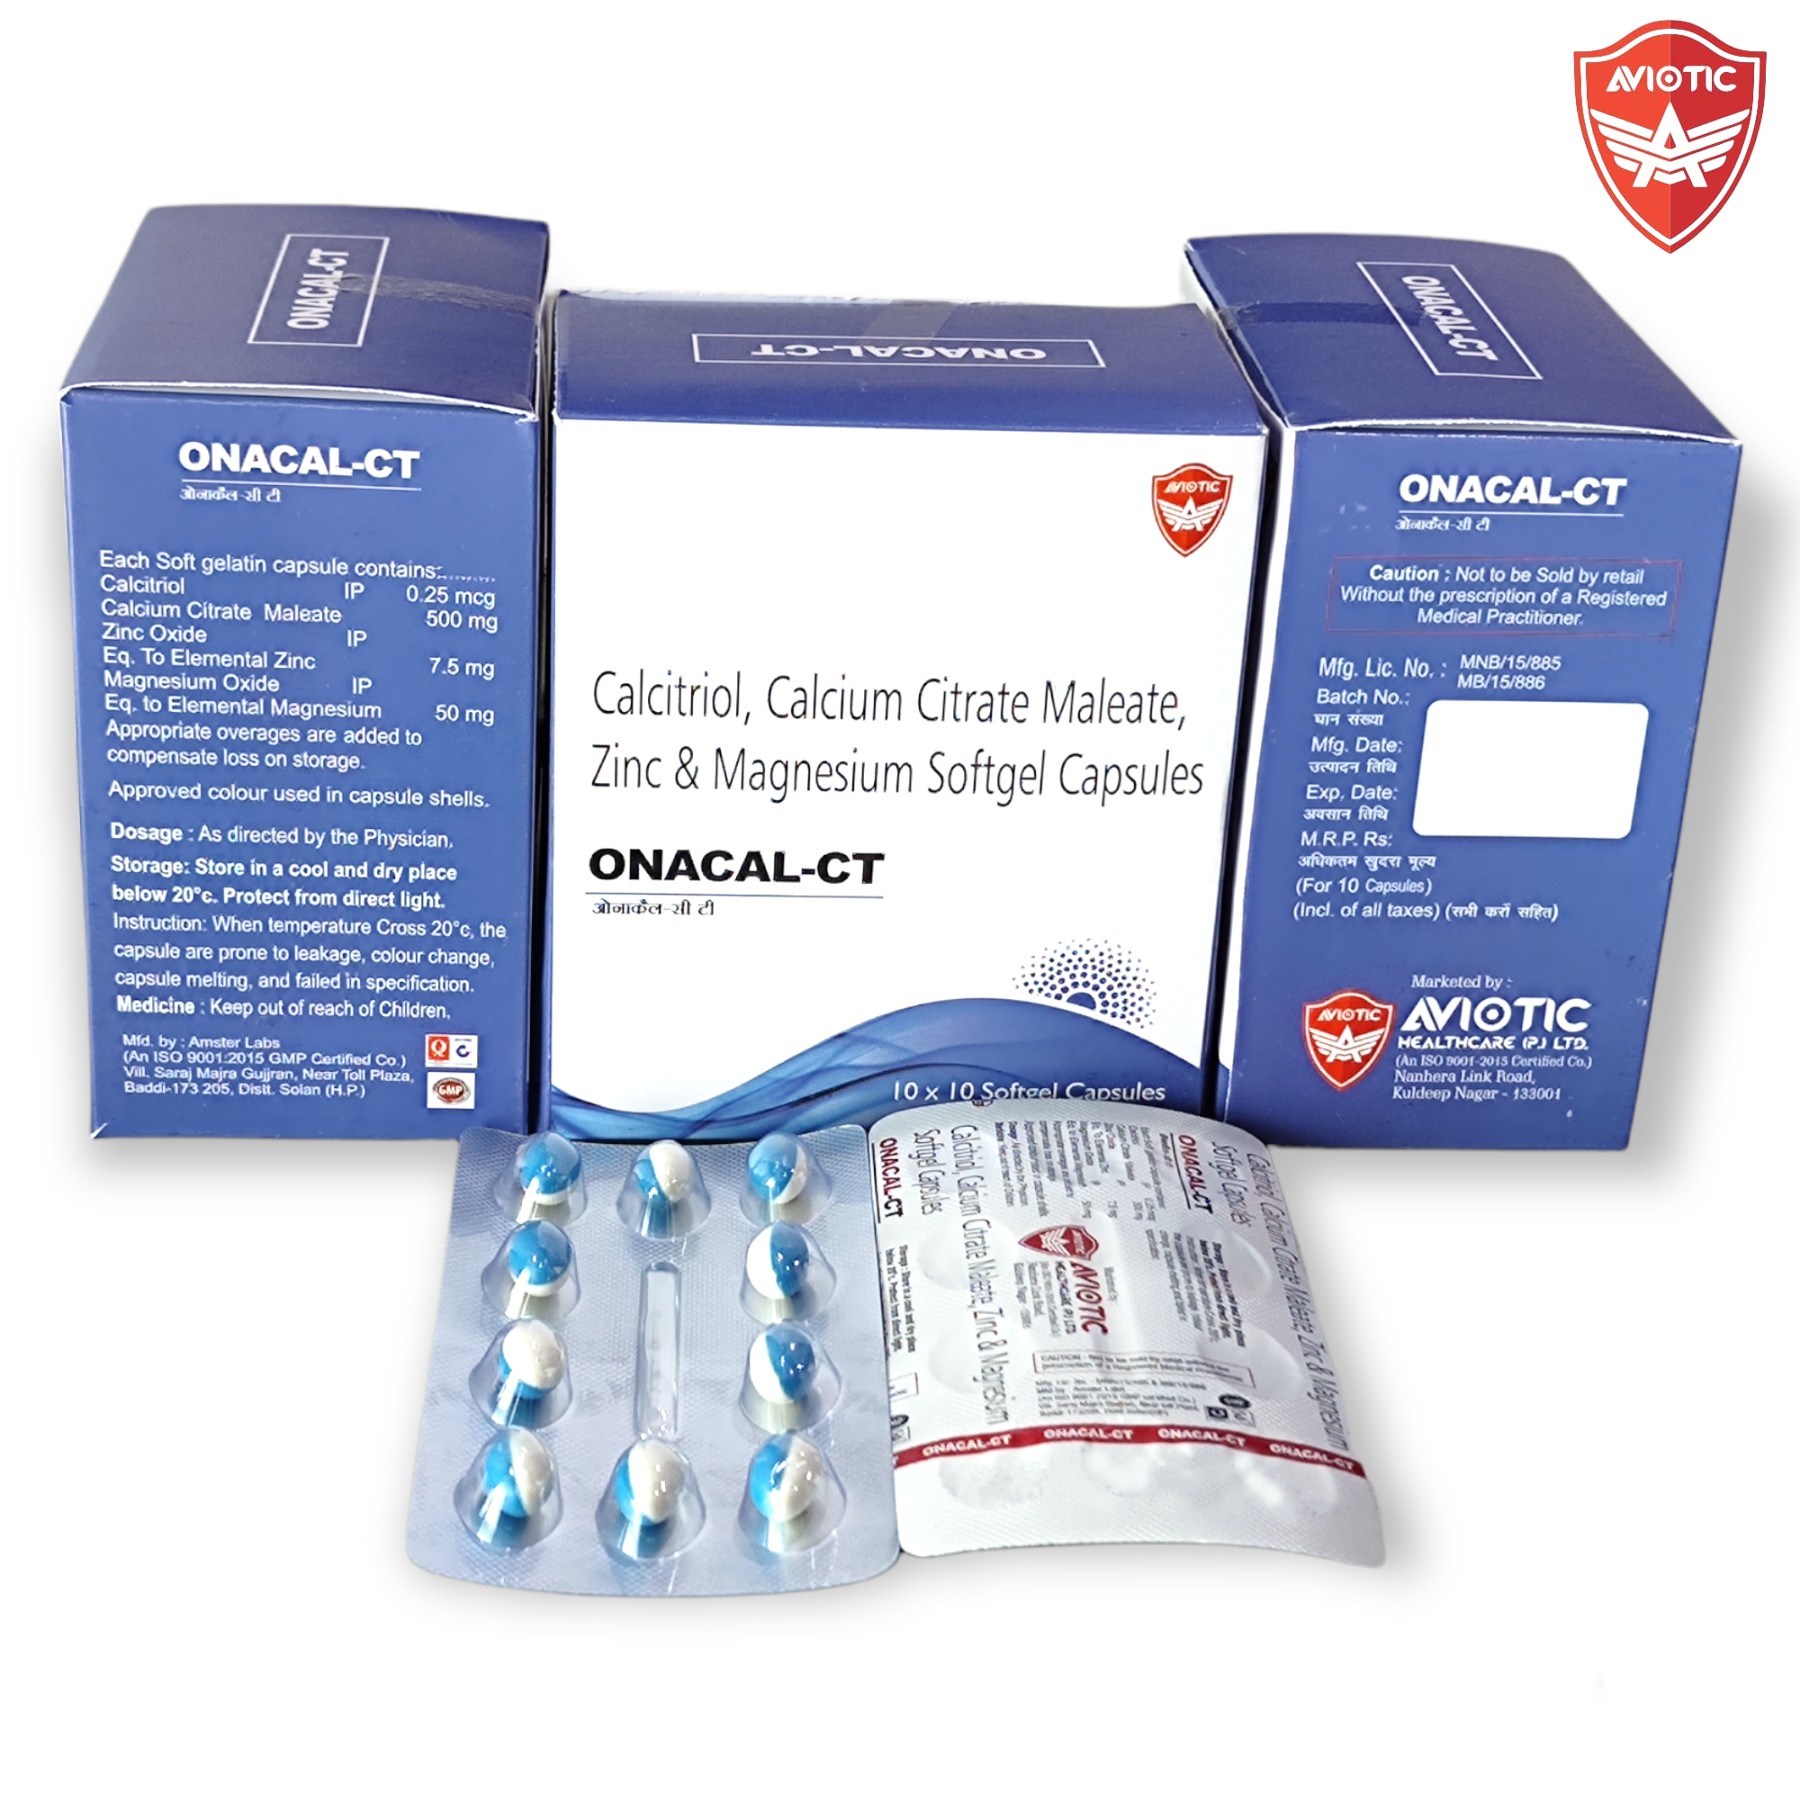 Onacal-CT Capsules